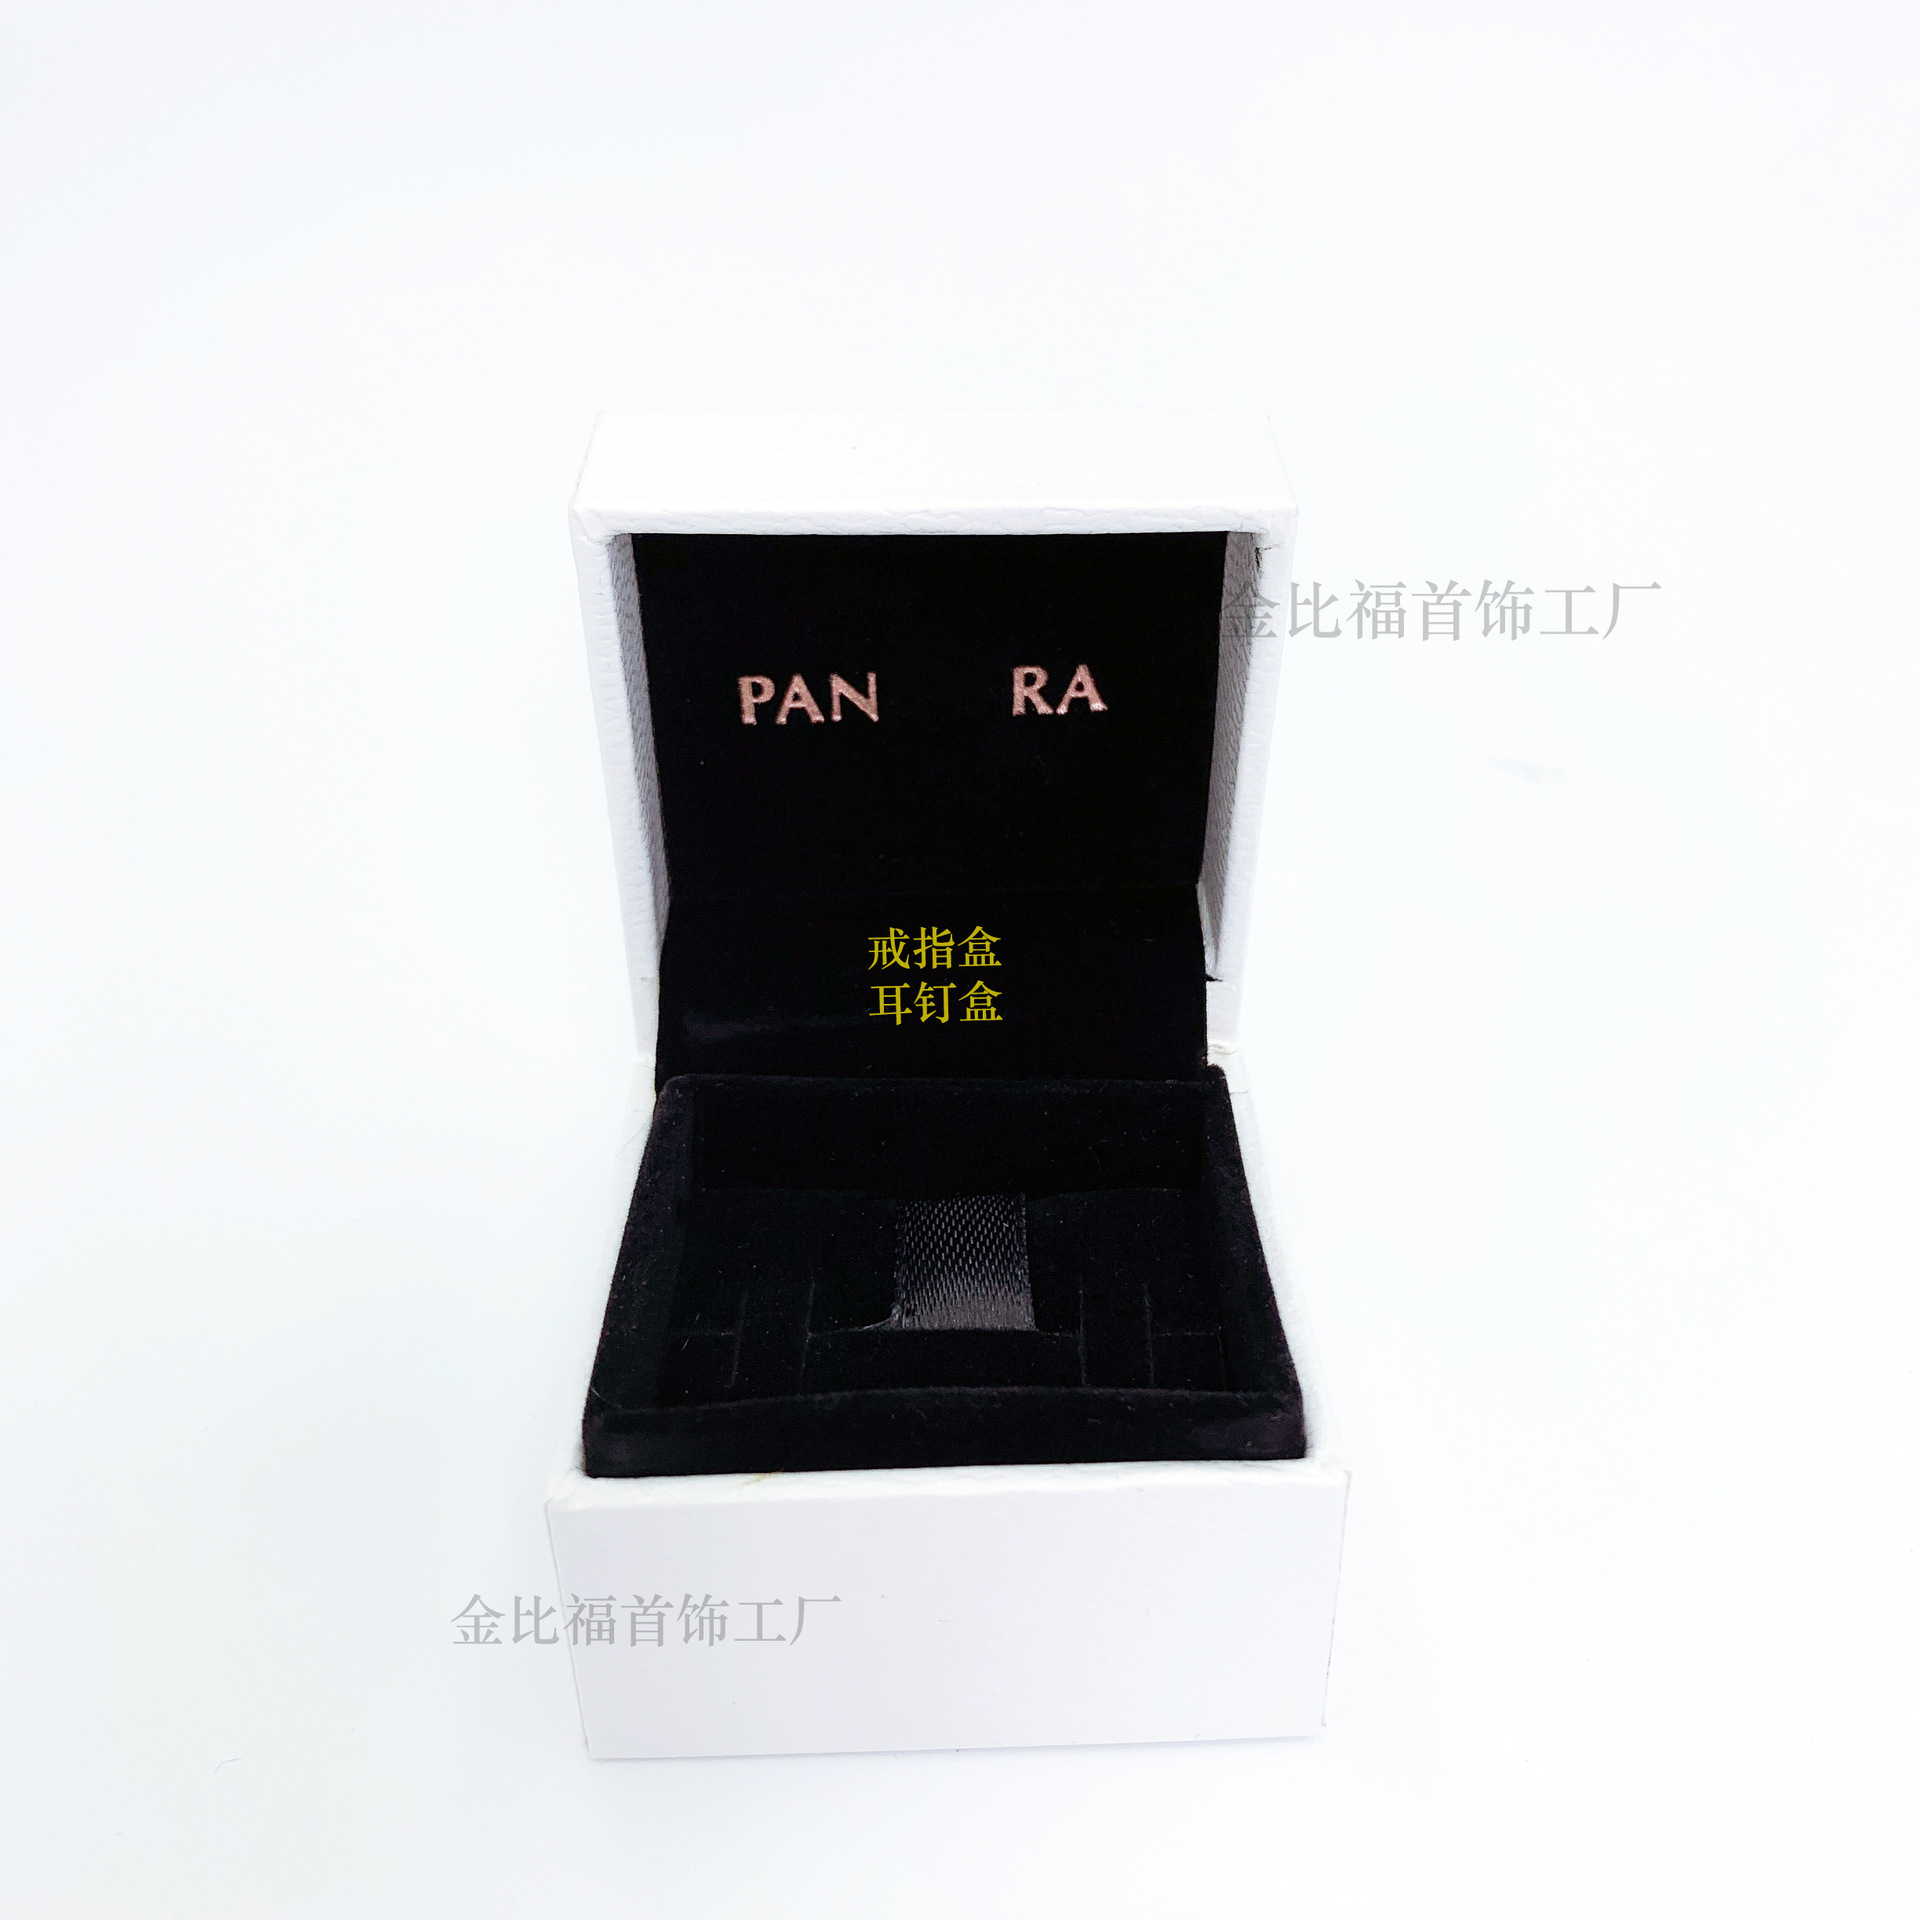 Jinbifu Panjia Ornament Original Classic Packaging Six-Piece Set Bracelet Box Silver Polishing Cloth Manual Flannel Bag